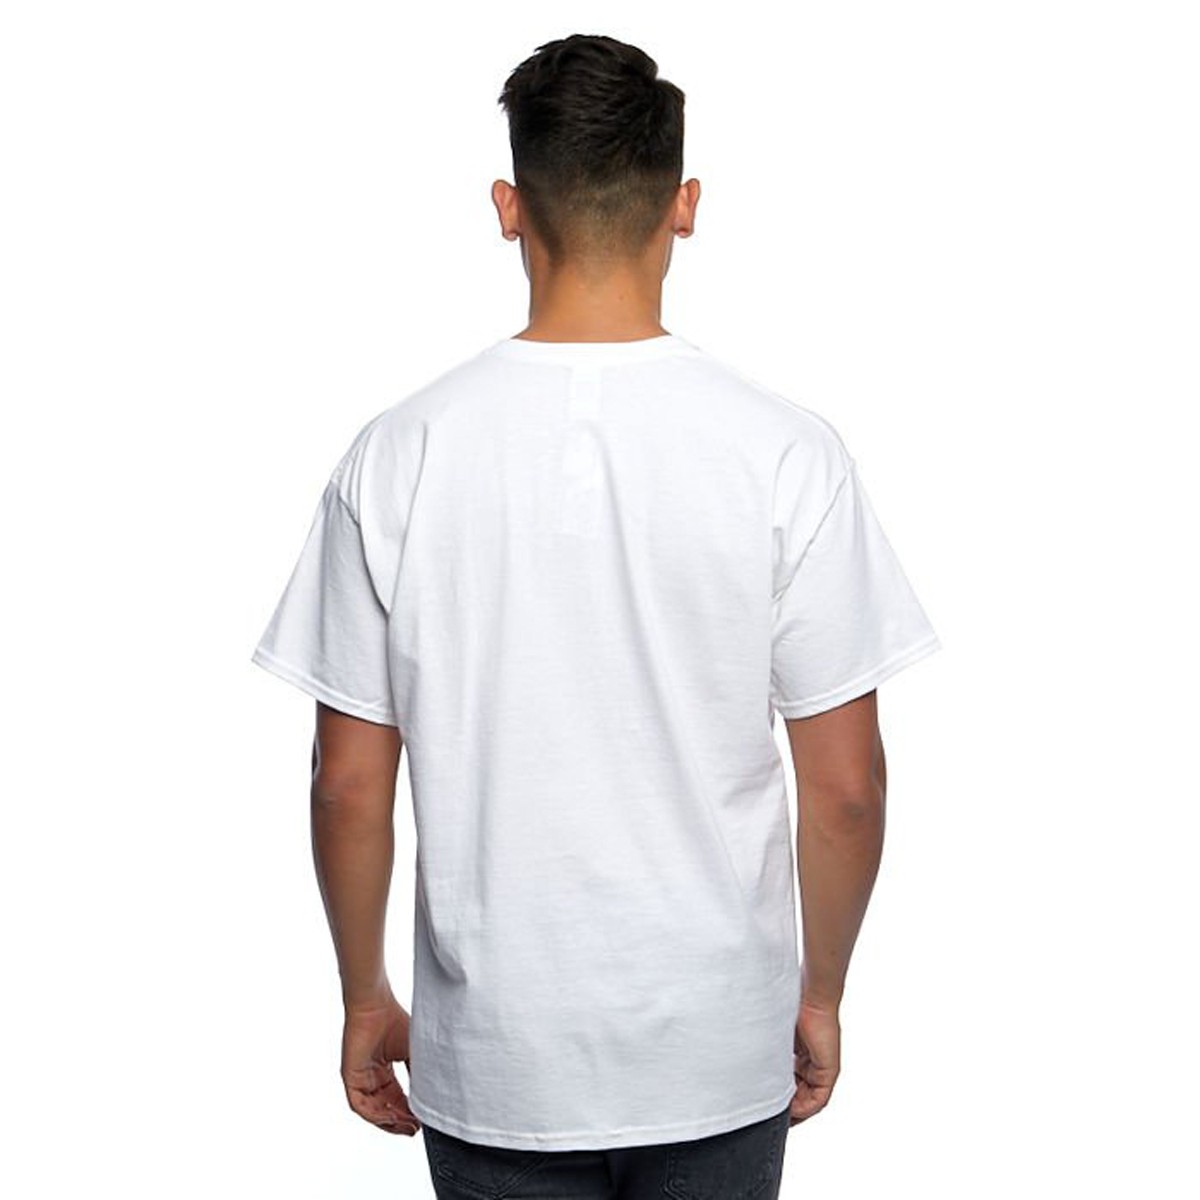 Thrasher Skategoat White T-Shirt 110117